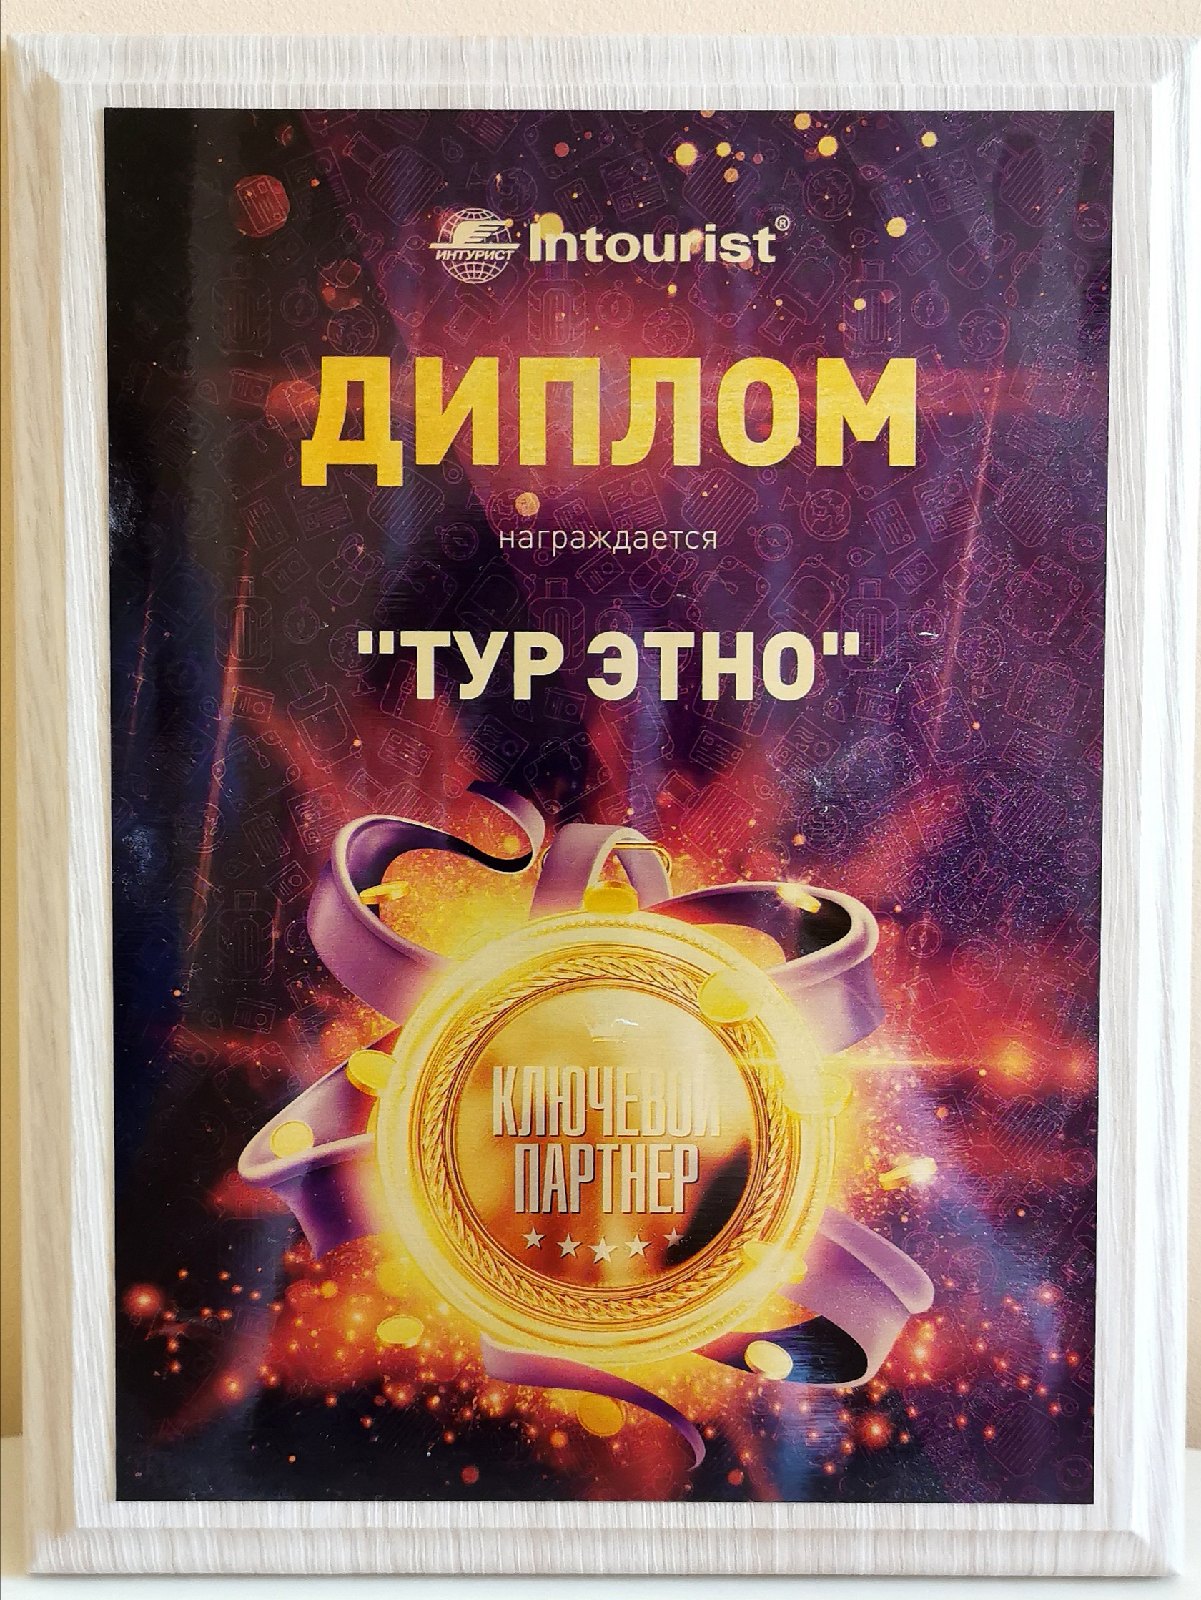 Intourist - Тур Этно, ключевой партнер 2019